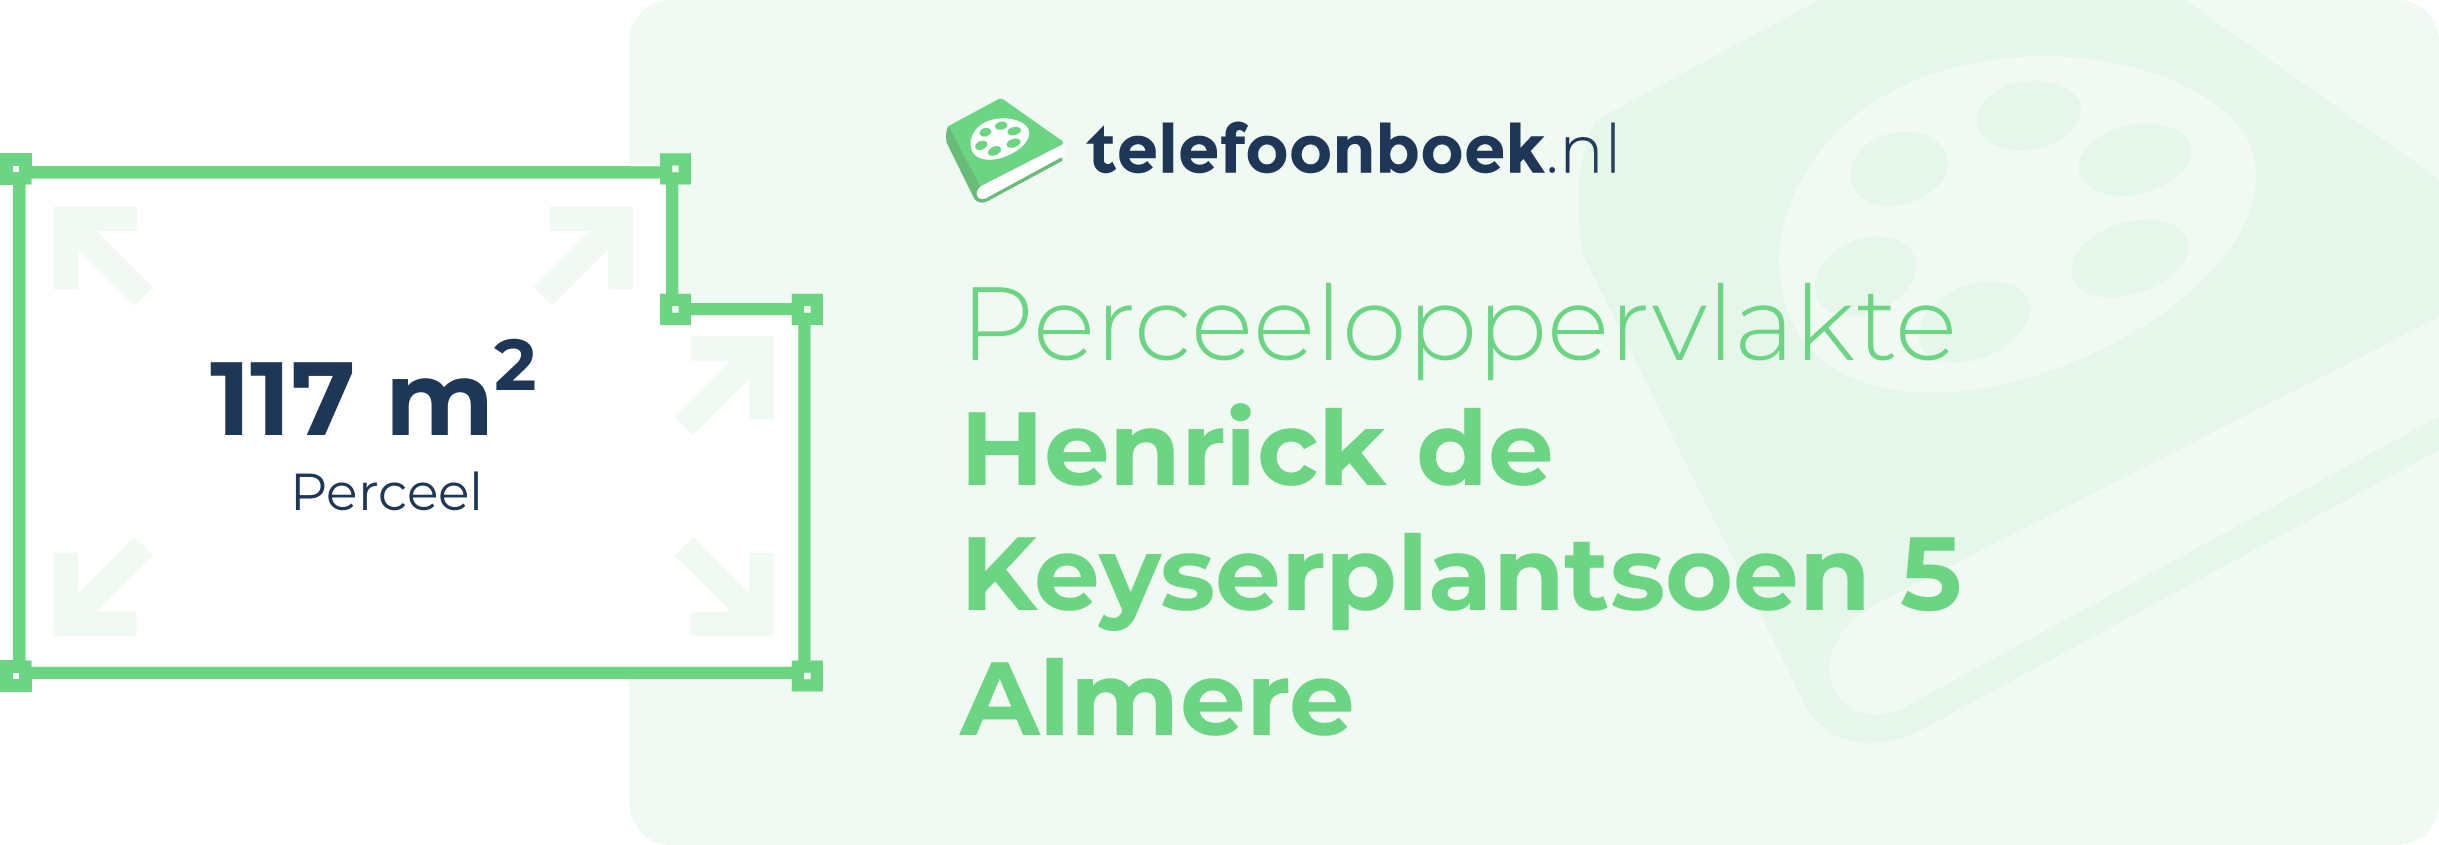 Perceeloppervlakte Henrick De Keyserplantsoen 5 Almere